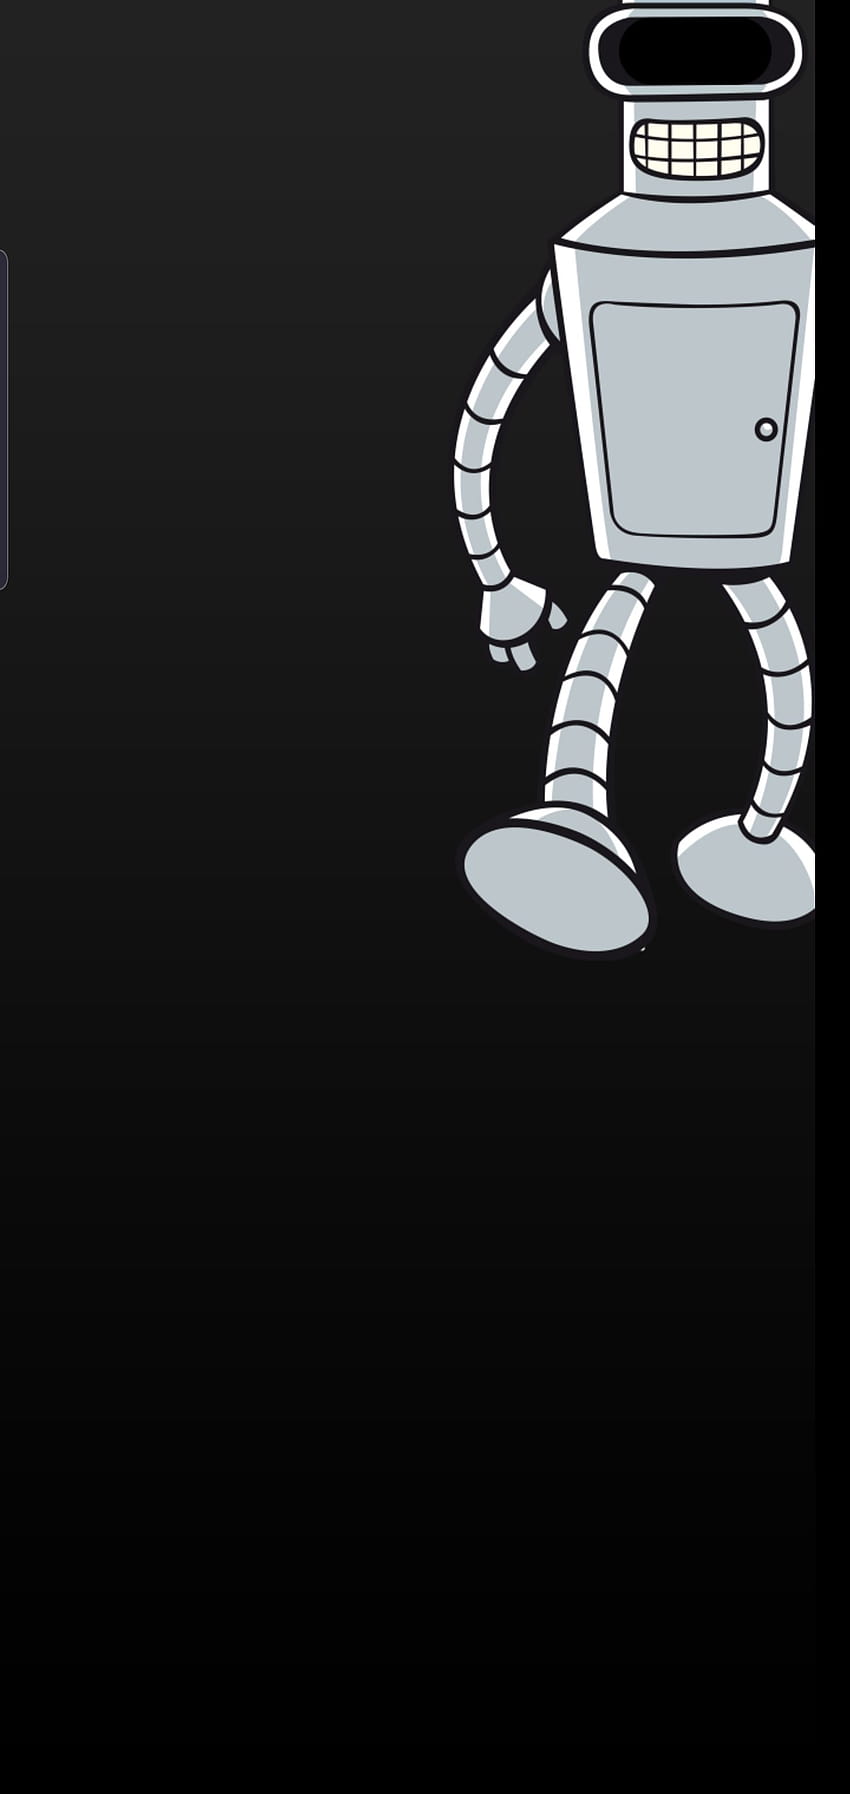 Bender, screensaver Futurama S10 5G/ wallpaper ponsel HD